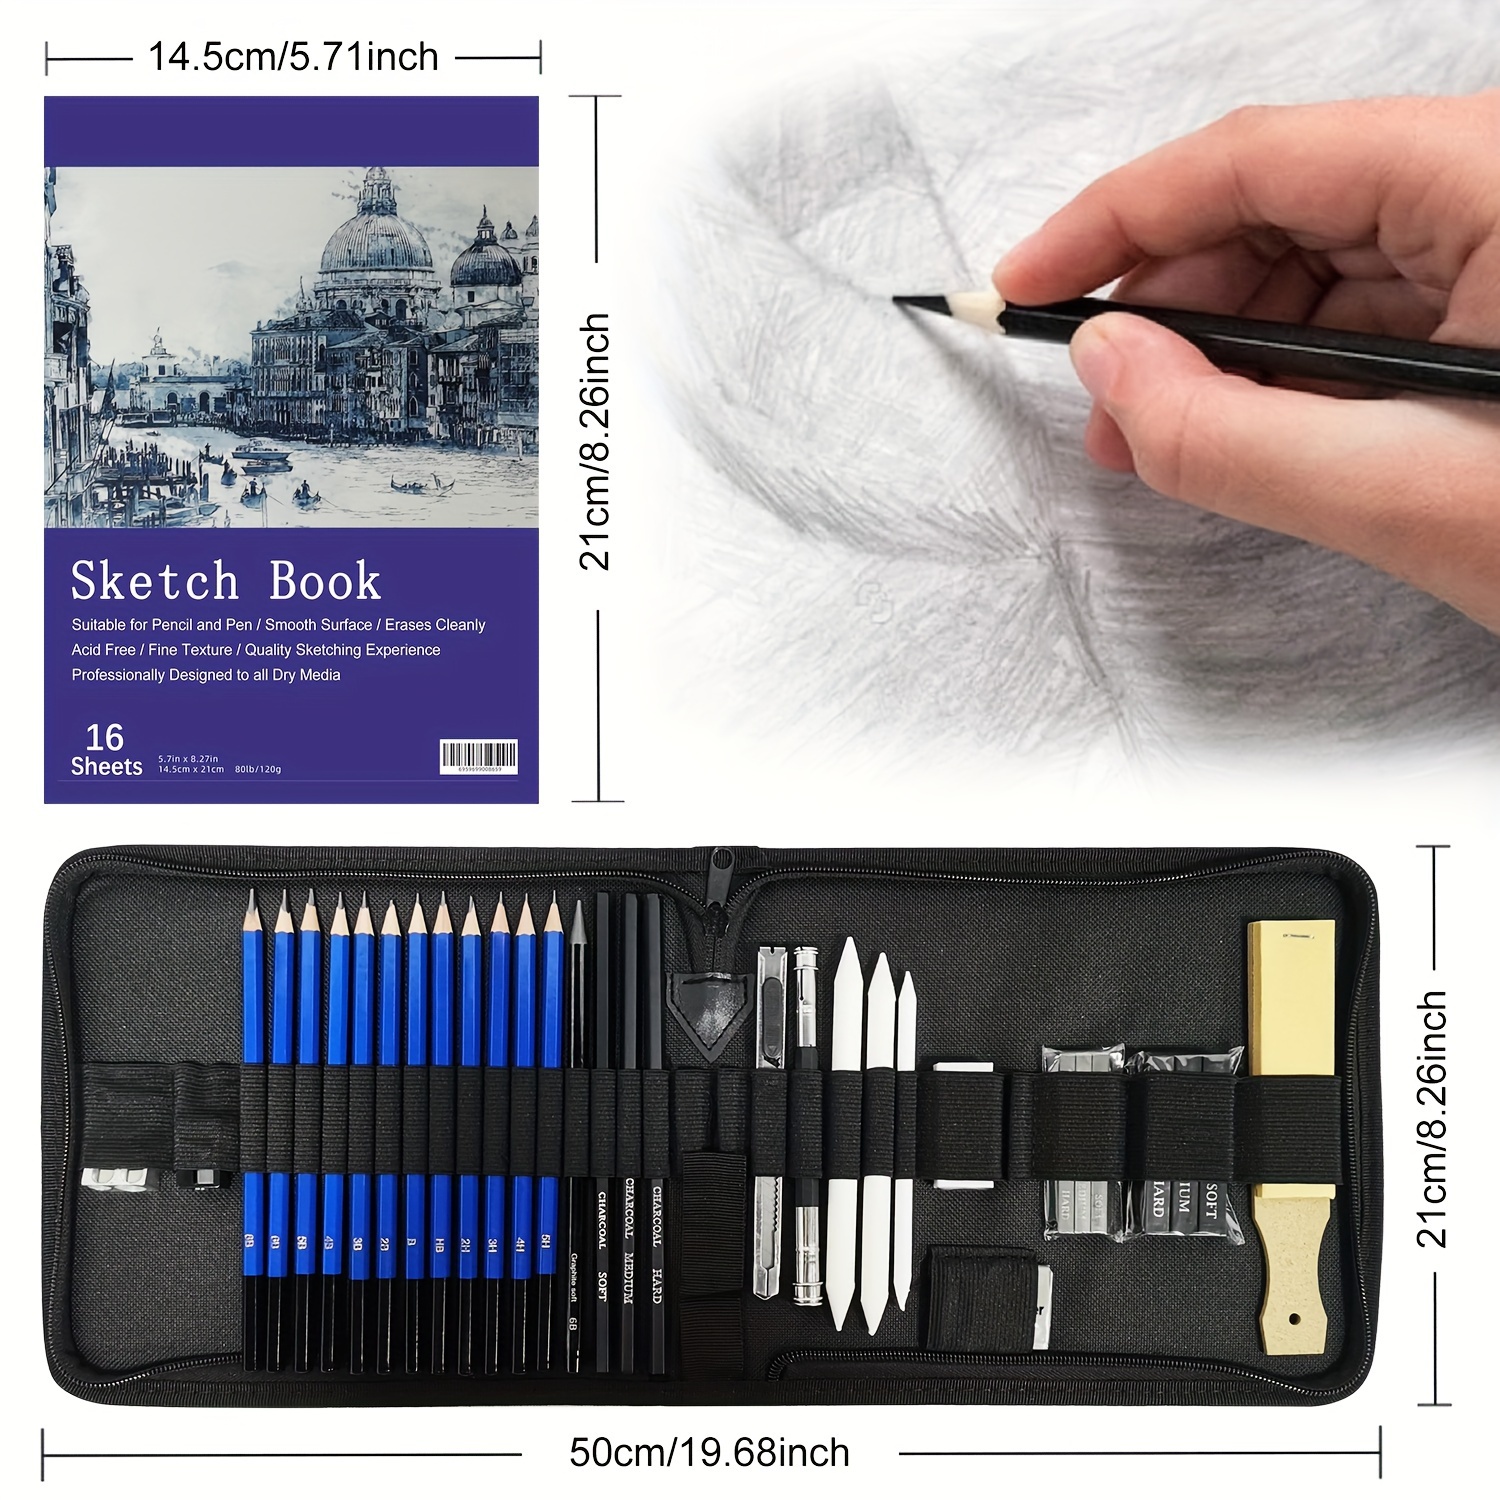 Kalour Professional Drawing Kit, Sketch Pencil Set, Professional